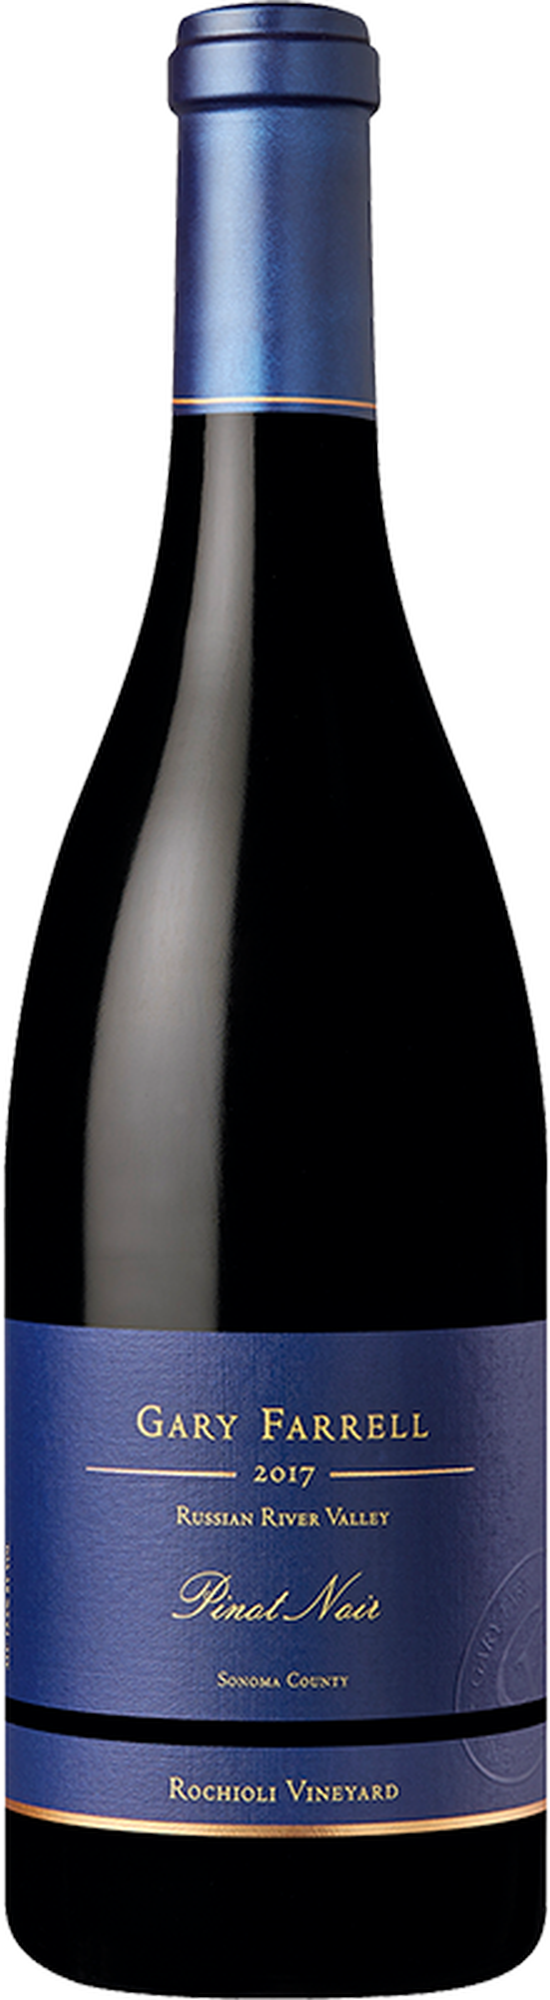 2017 Rochioli Vineyard Pinot Noir